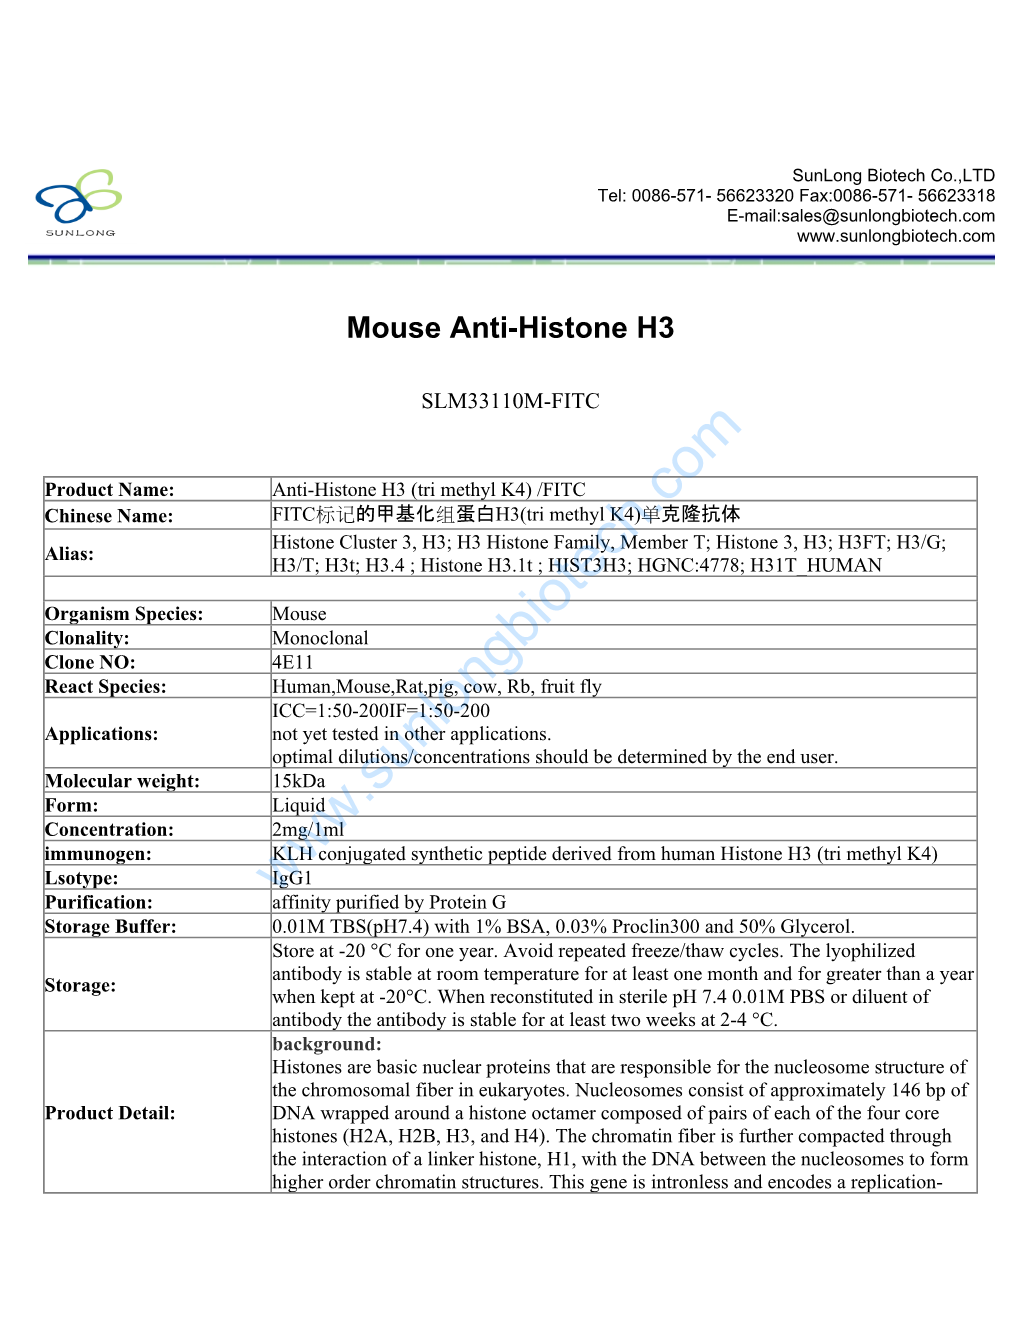 Mouse Anti-Histone H3-SLM33110M-FITC